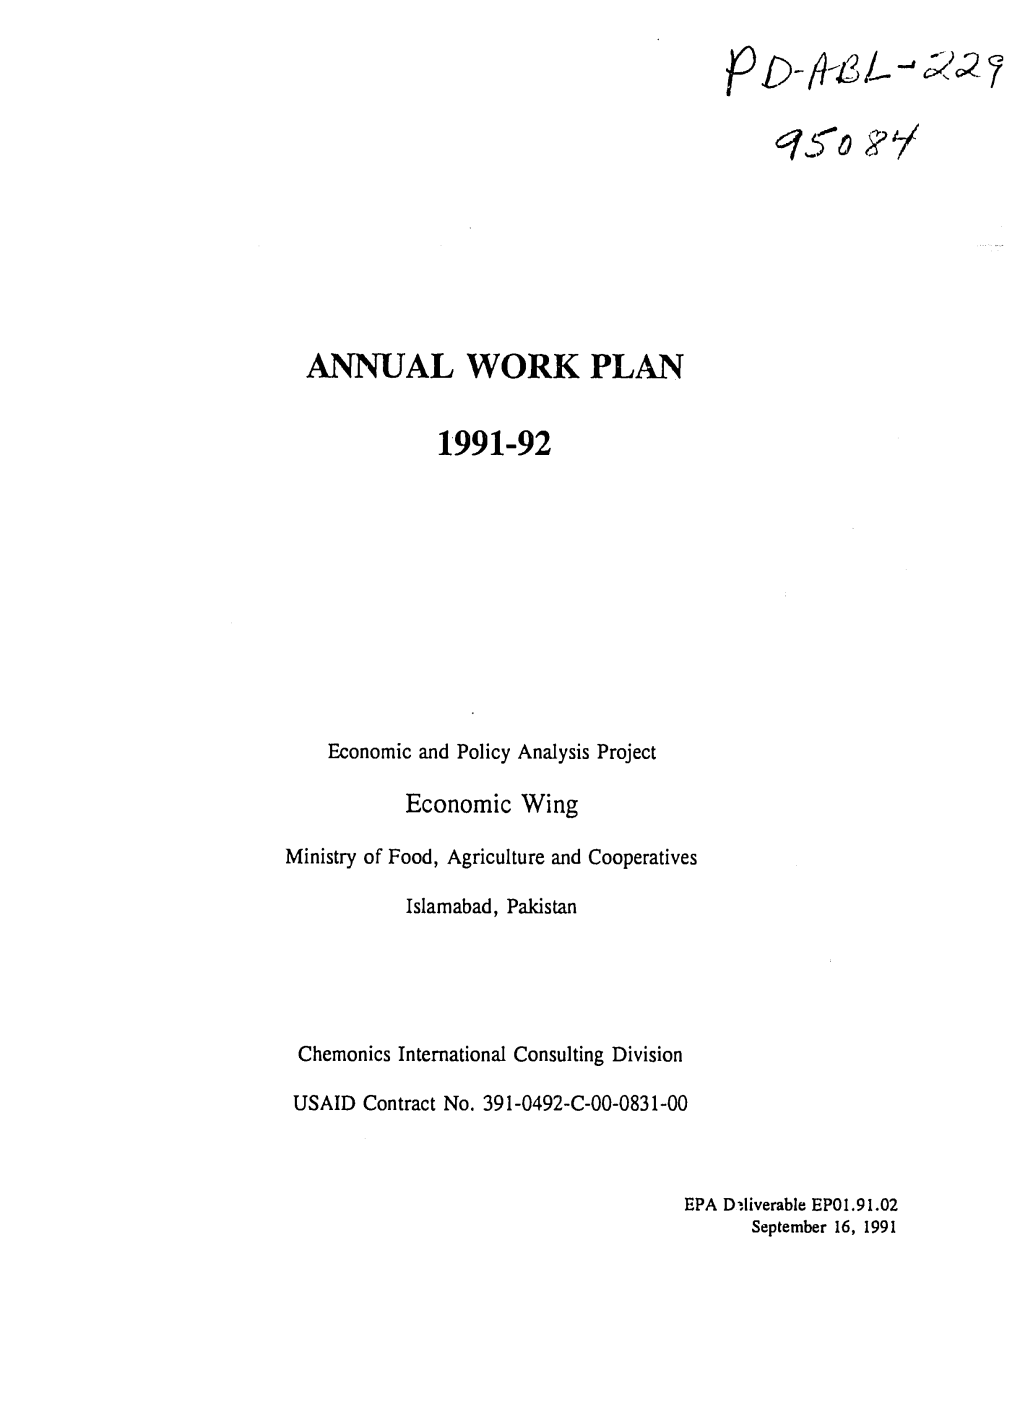 Annual Work Plan 1991-92